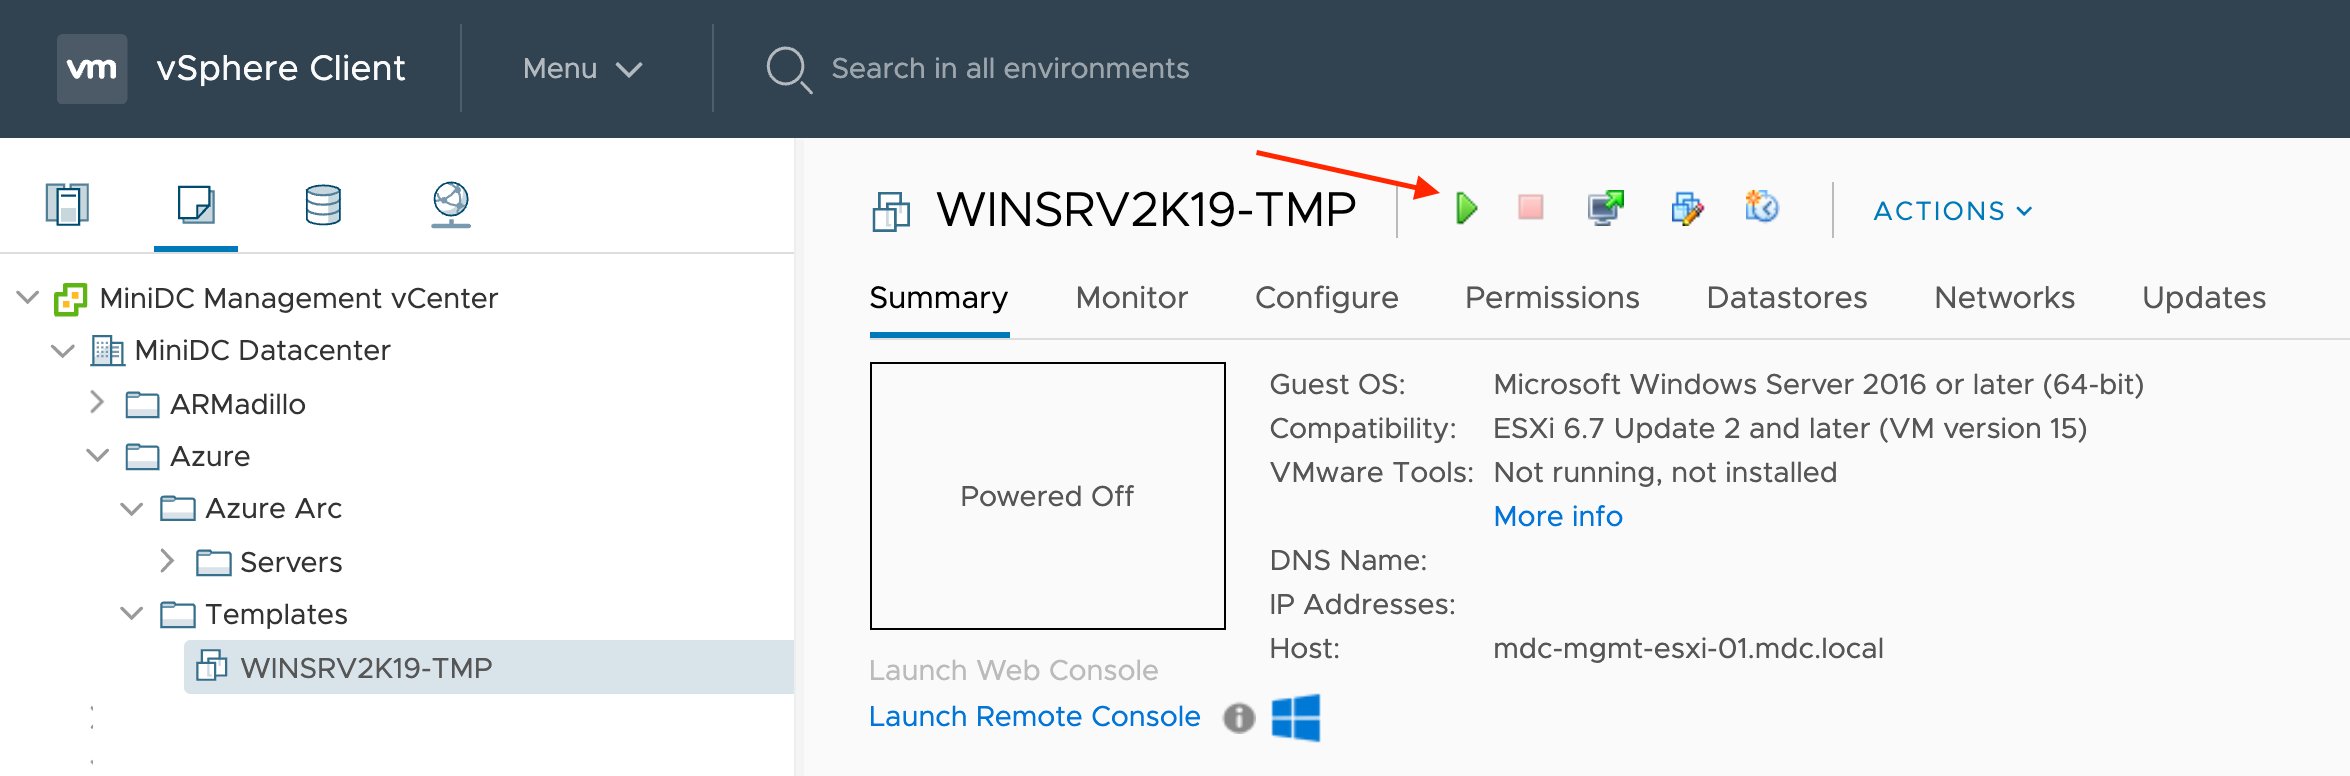 updating vmware tools for windows server 2012